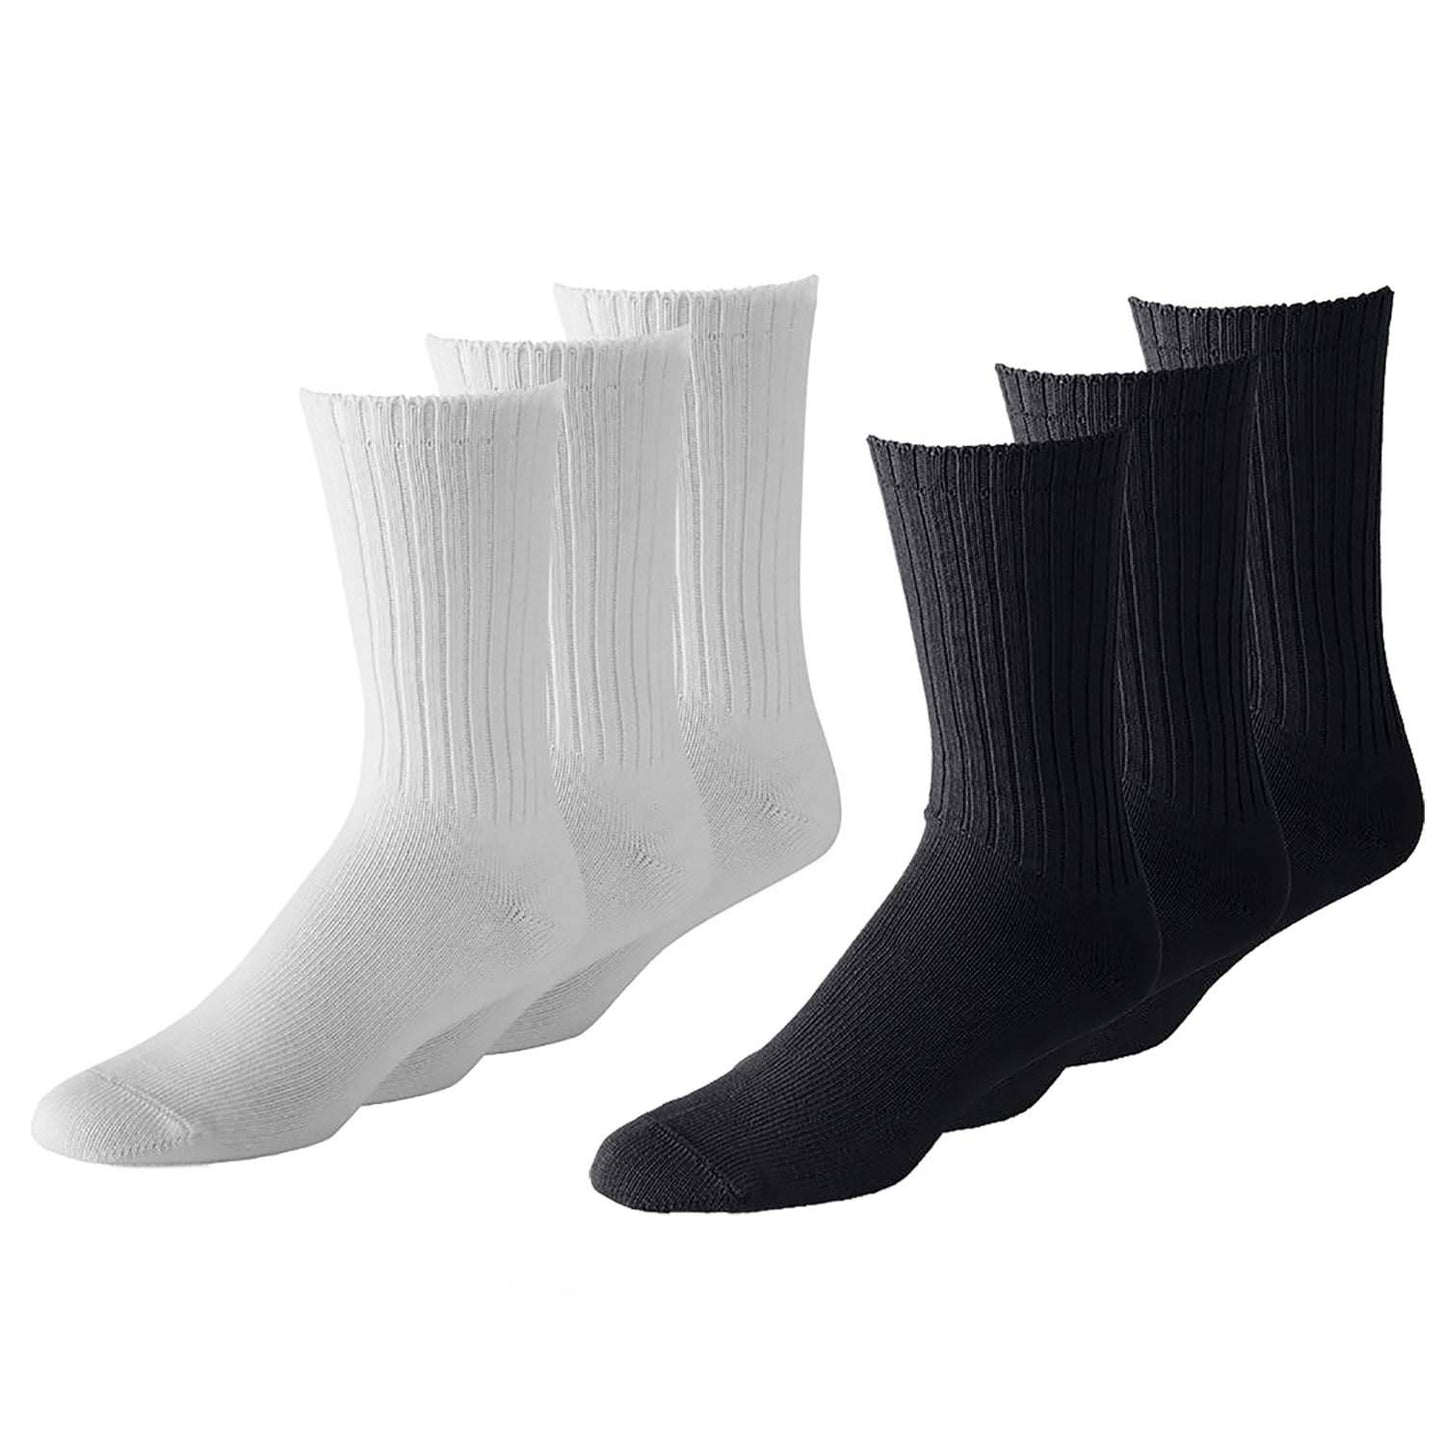 24 Pairs Women's Athletic Crew Socks - Bulk Wholesale Packs - Any Shoe Size